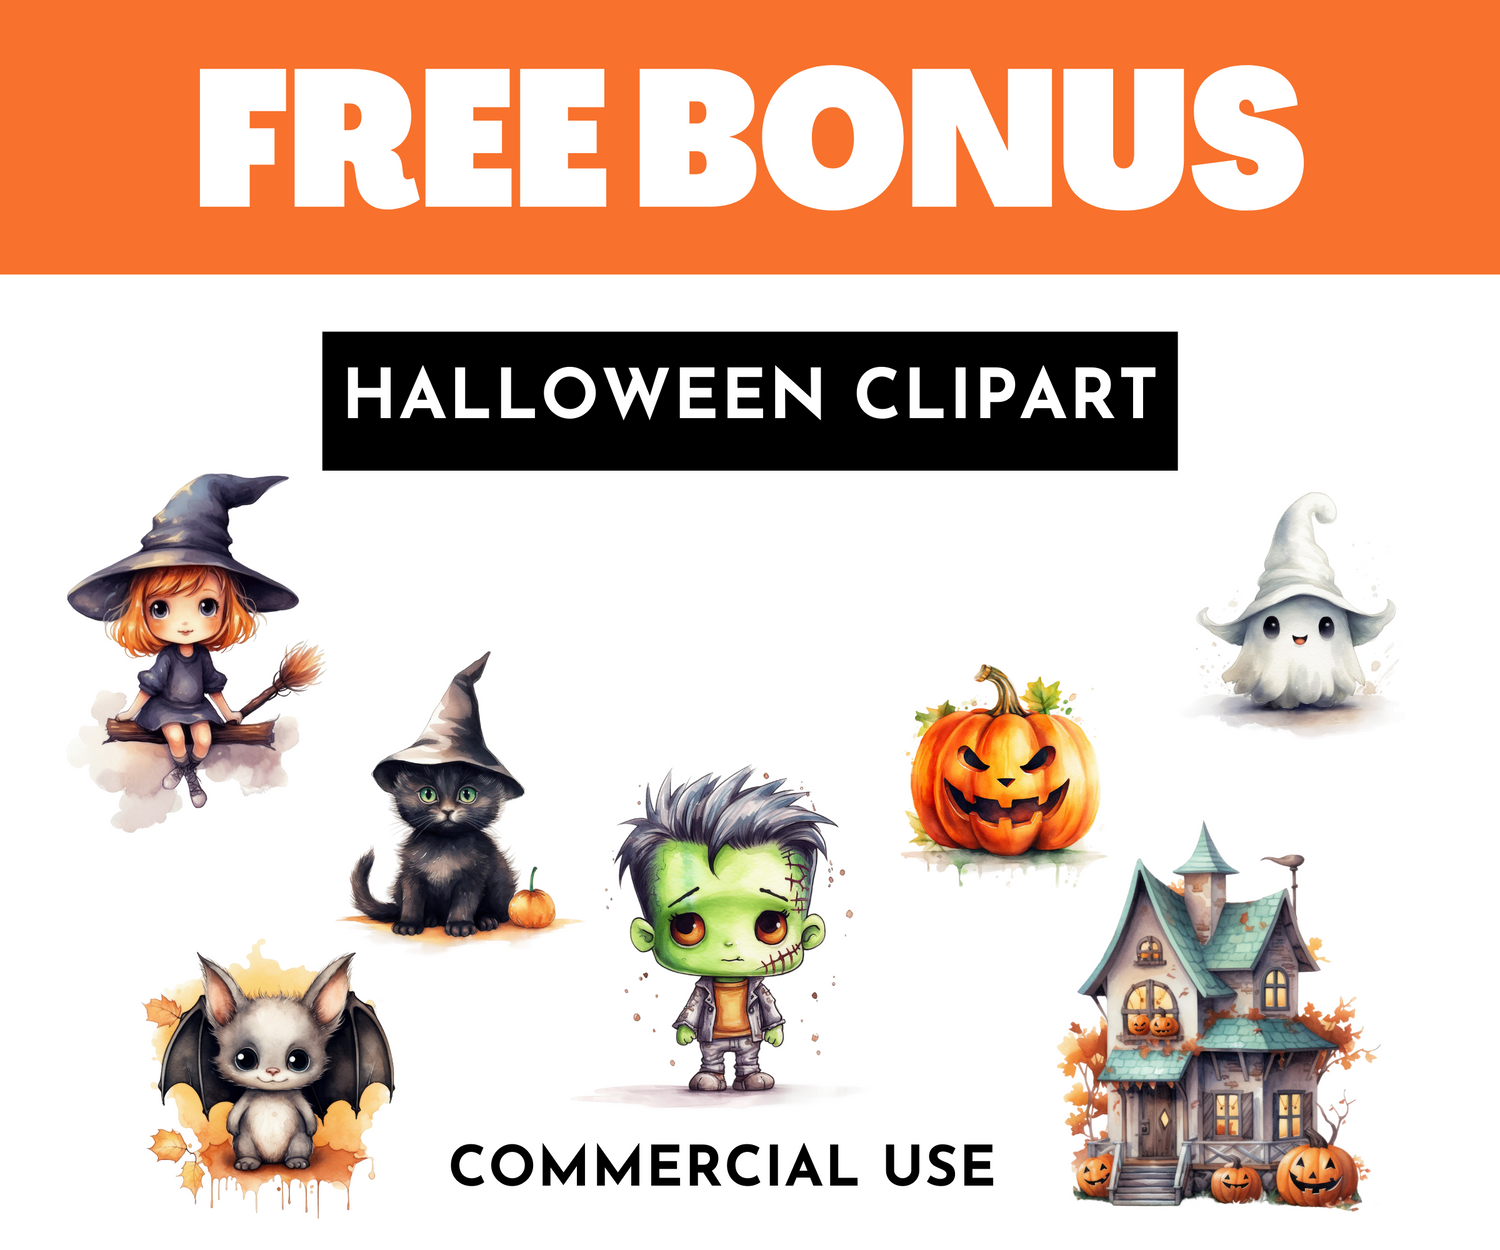 Free bonus halloween clipart pack commercial use